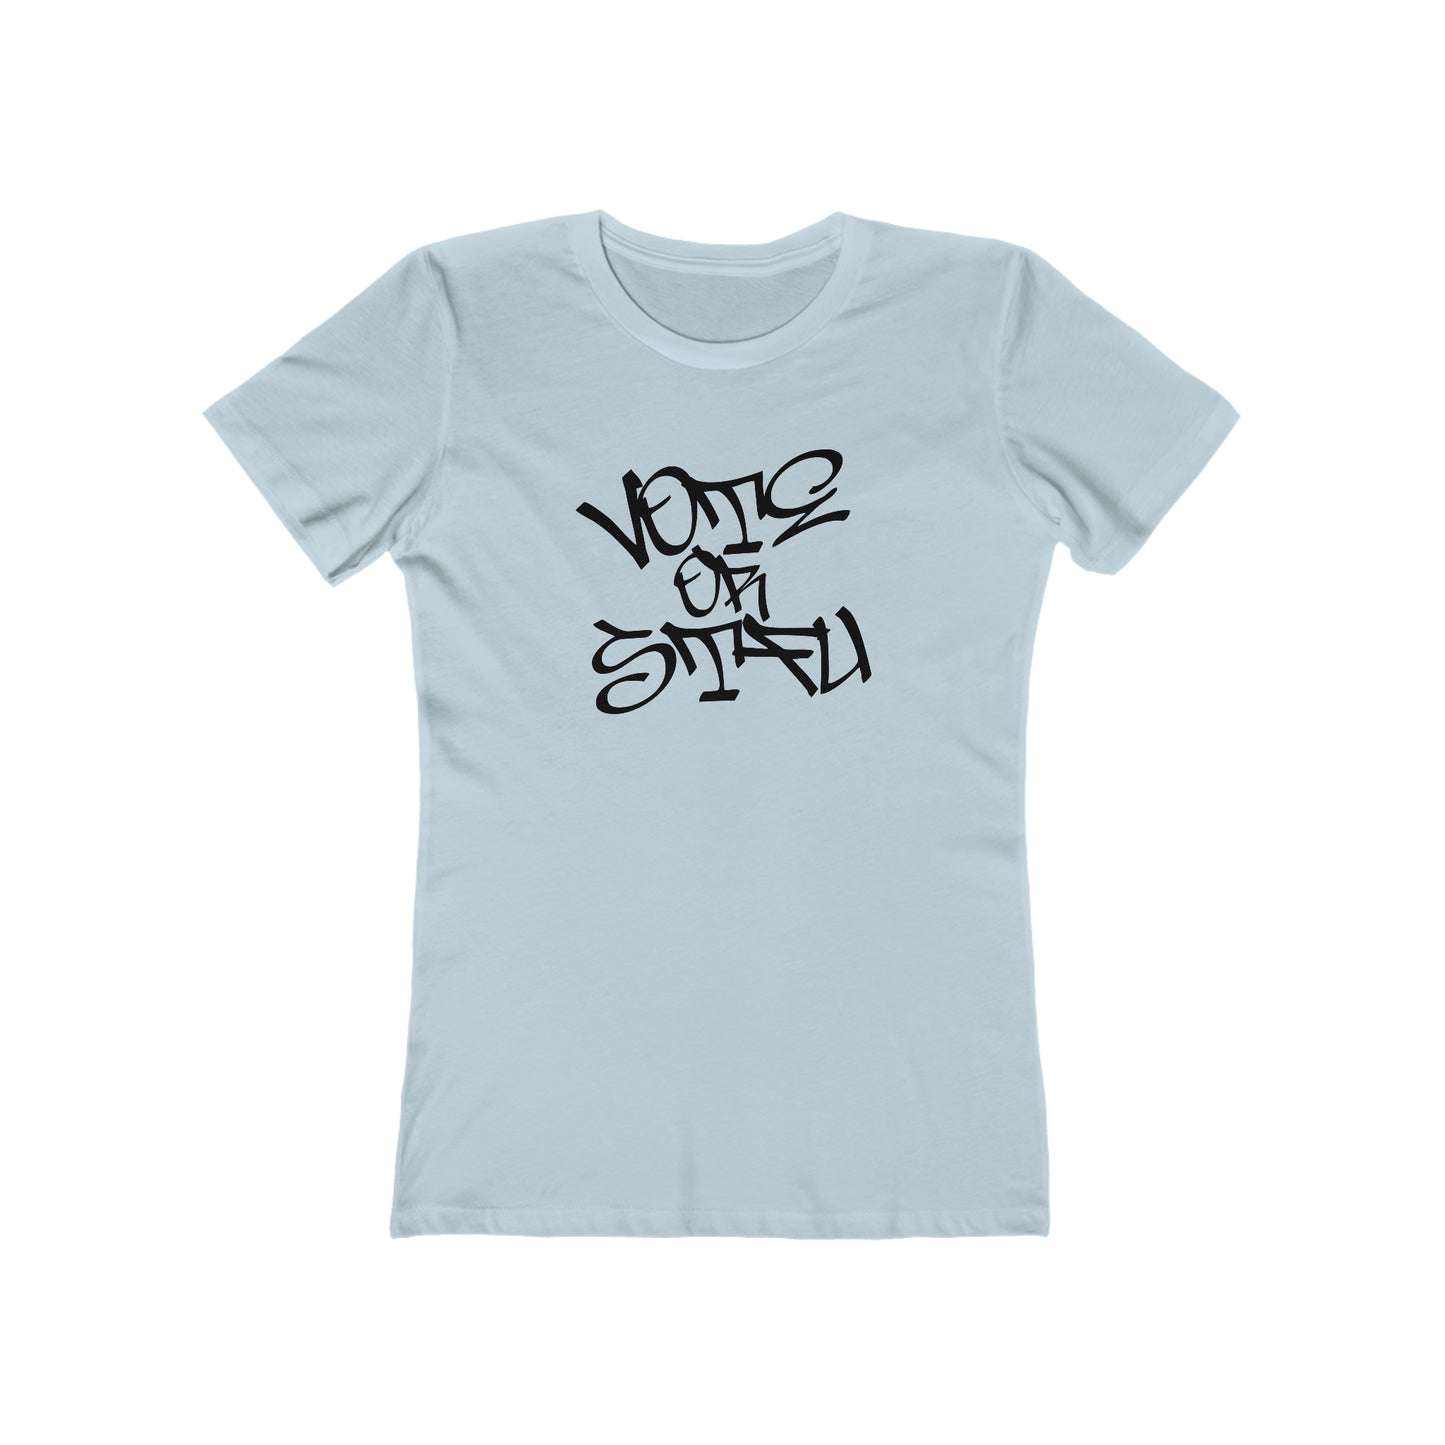 Graffiti Vote or STFU - Women's T-Shirt